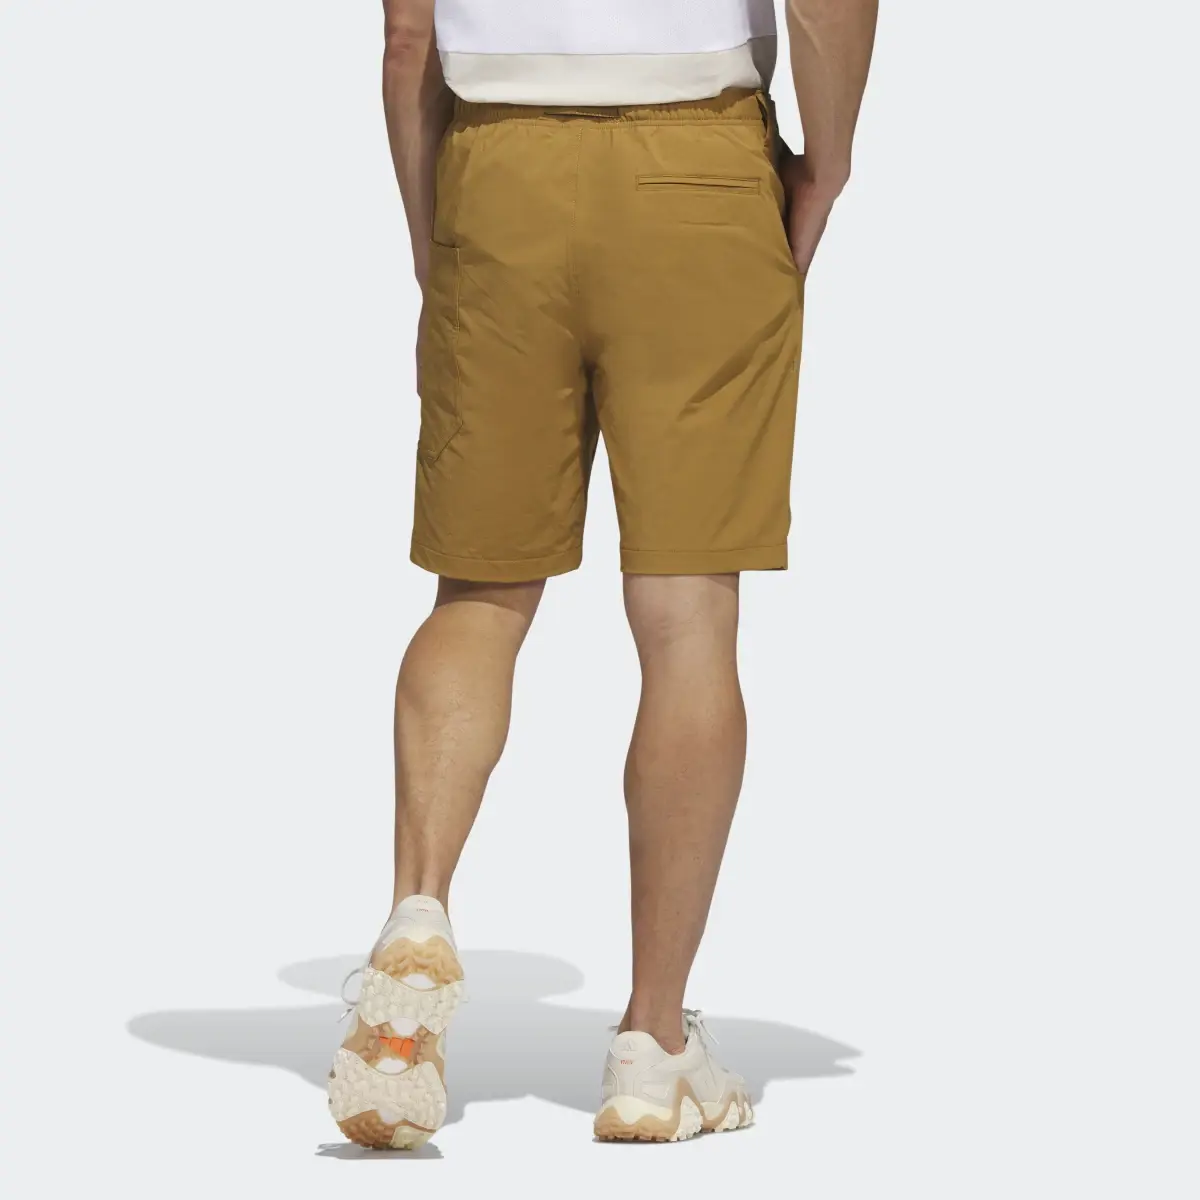 Adidas Adicross Golf Shorts. 2